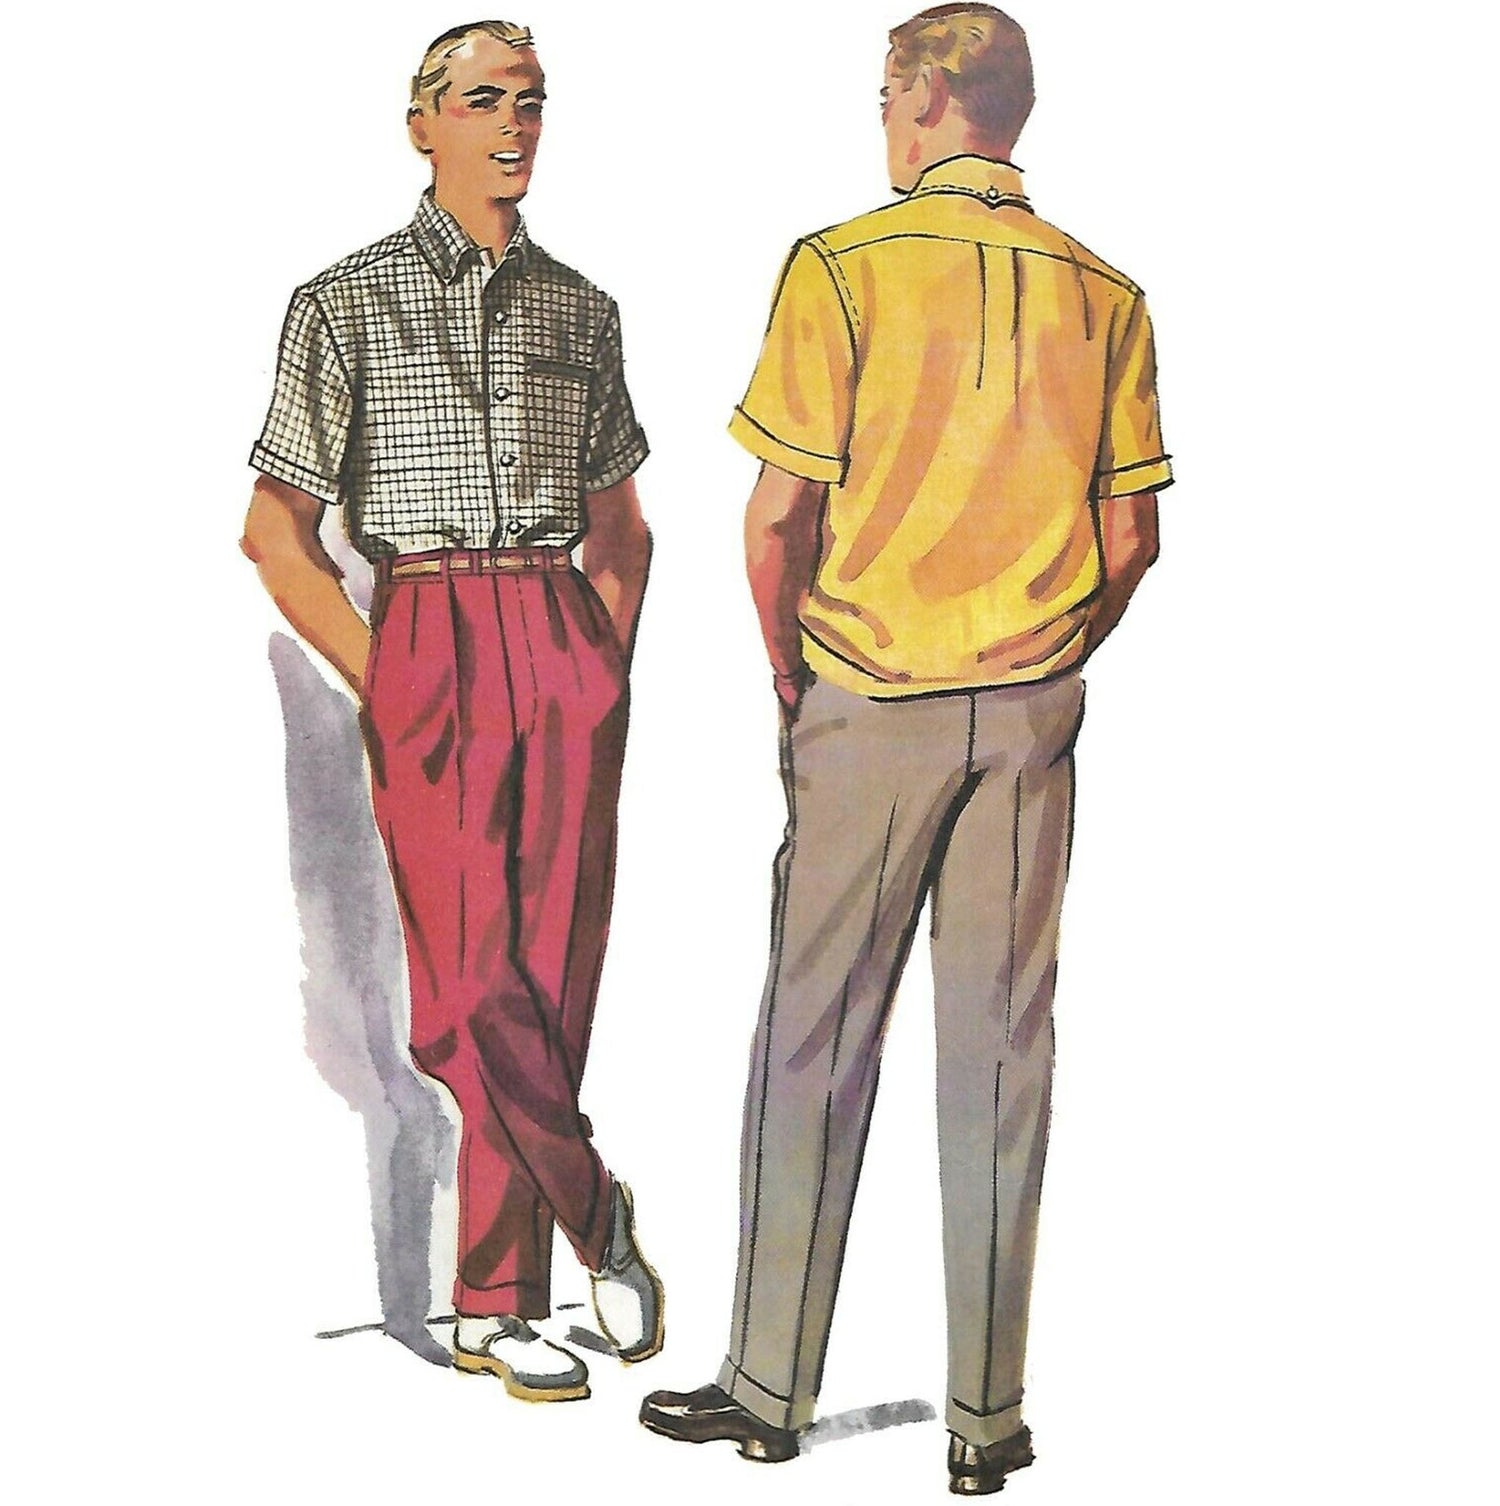 Men wearing shirts and slacks.